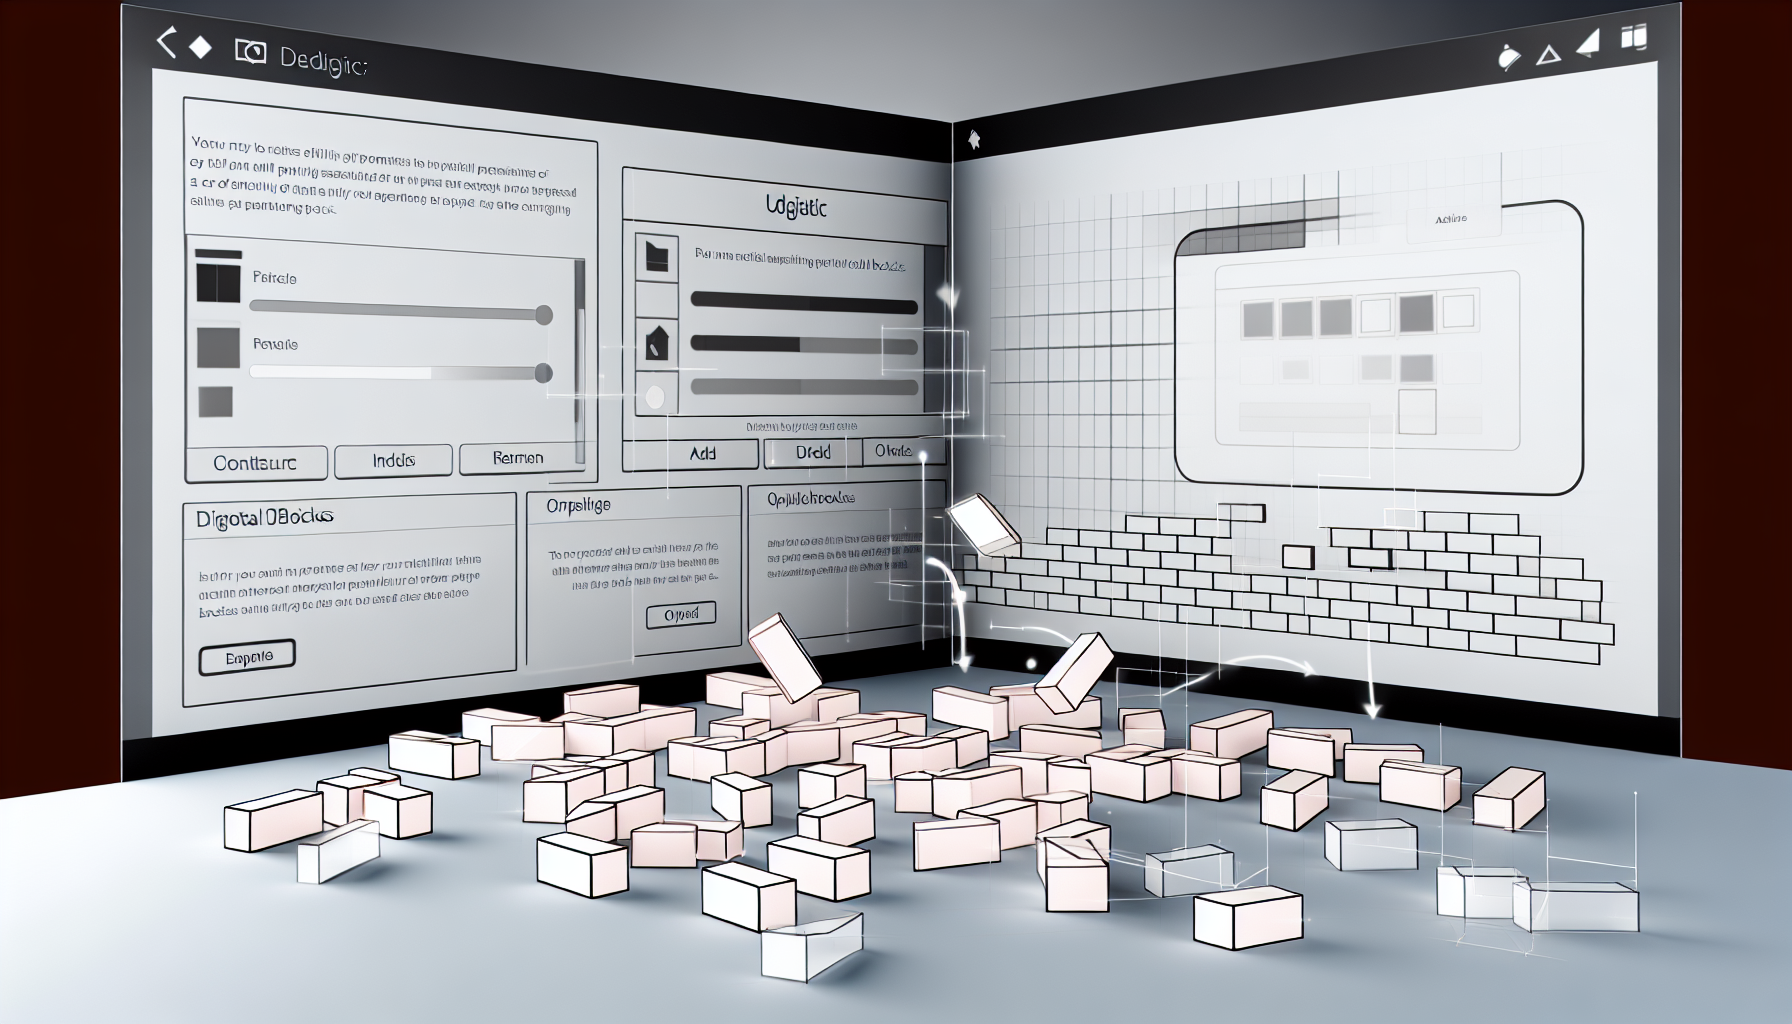 React Bricks Interface - A screenshot showcasing the visual editing capabilities of React Bricks.